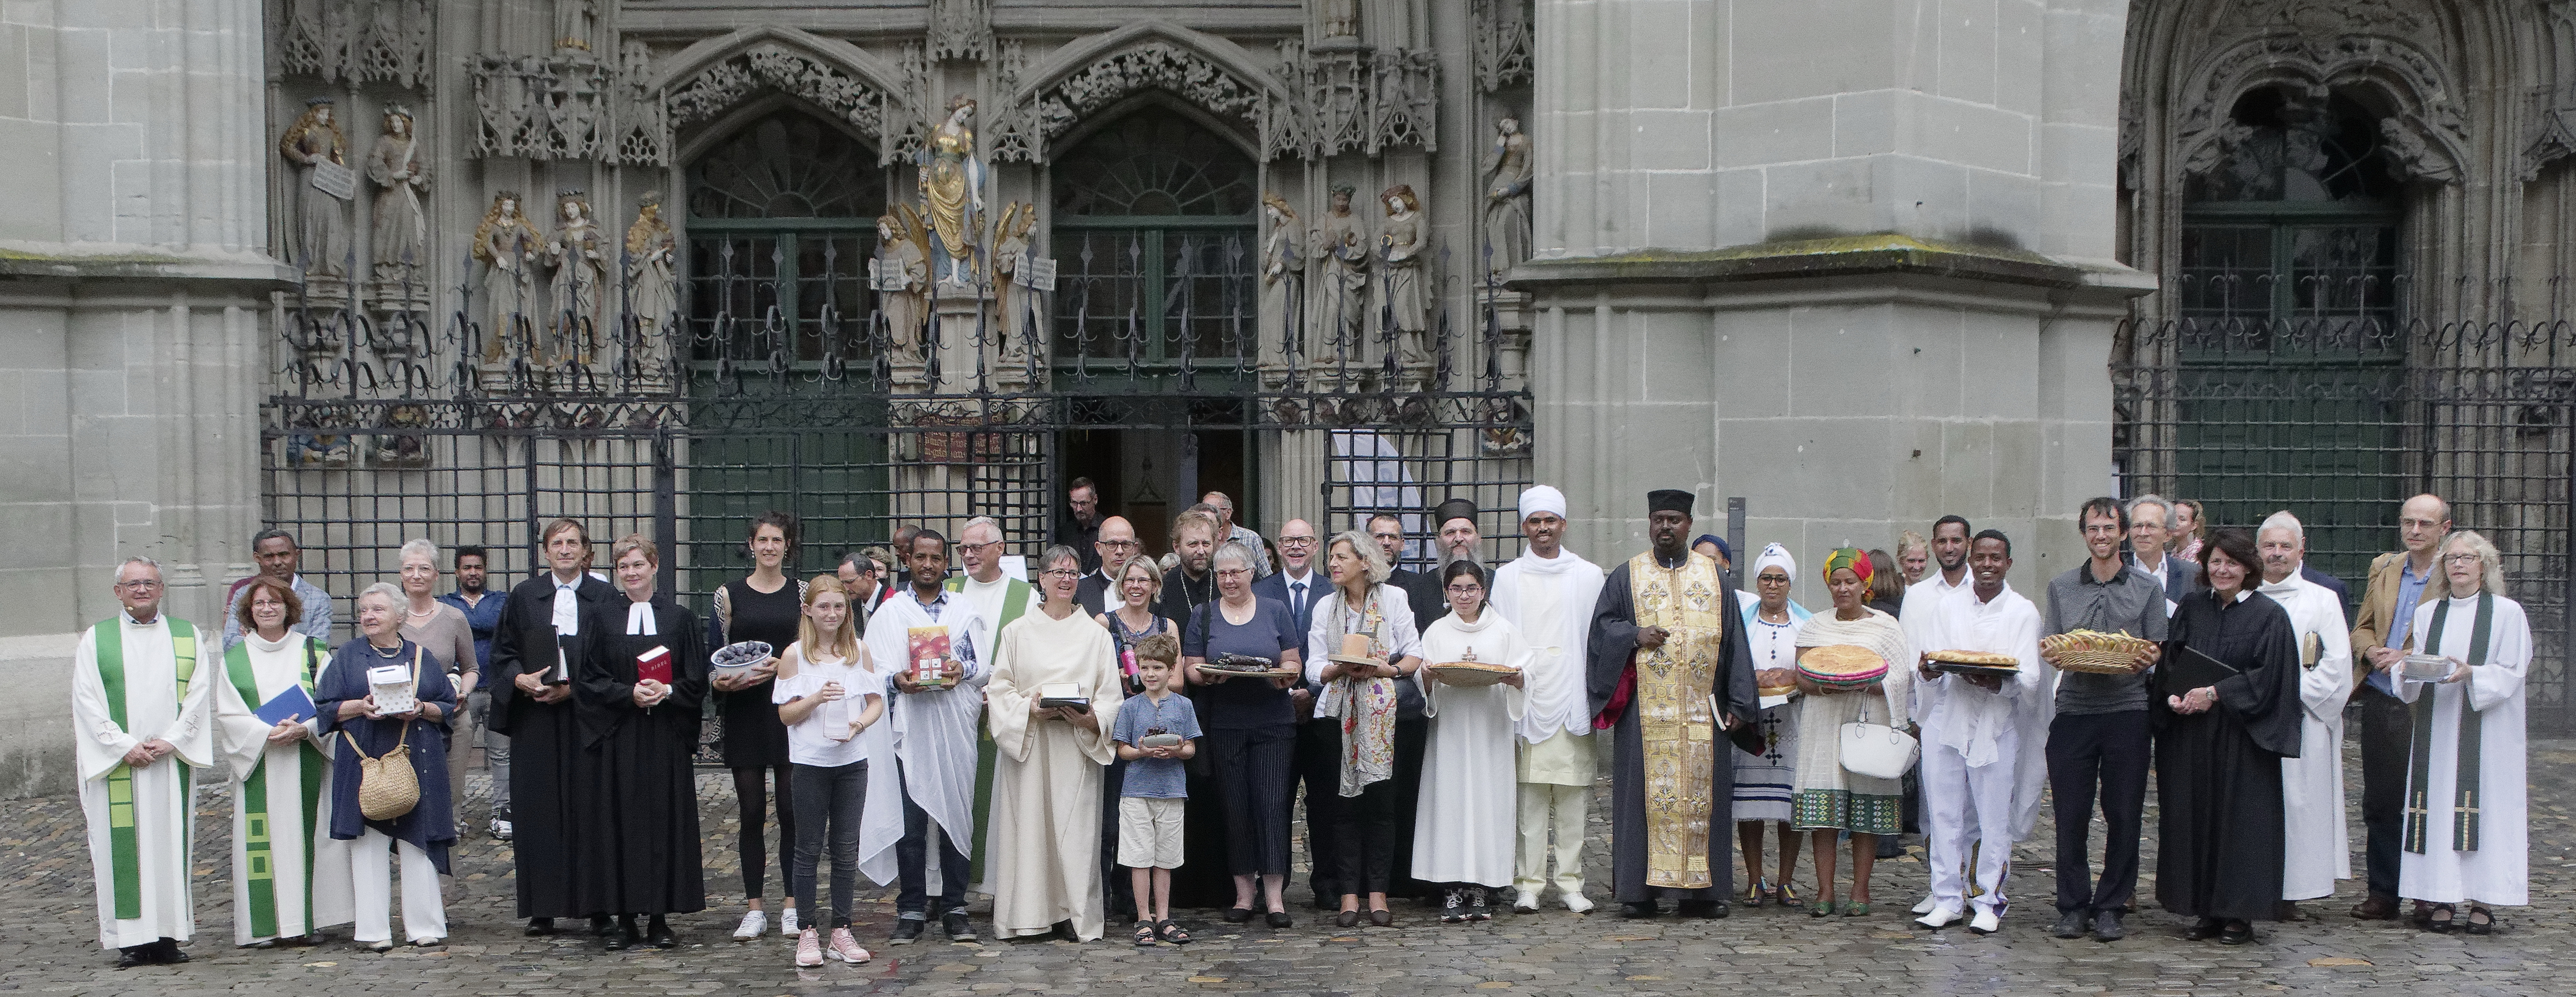 Teilnehmer*innen der Schöpfungsfeier am 1. September 2019 vor dem Berner Münster